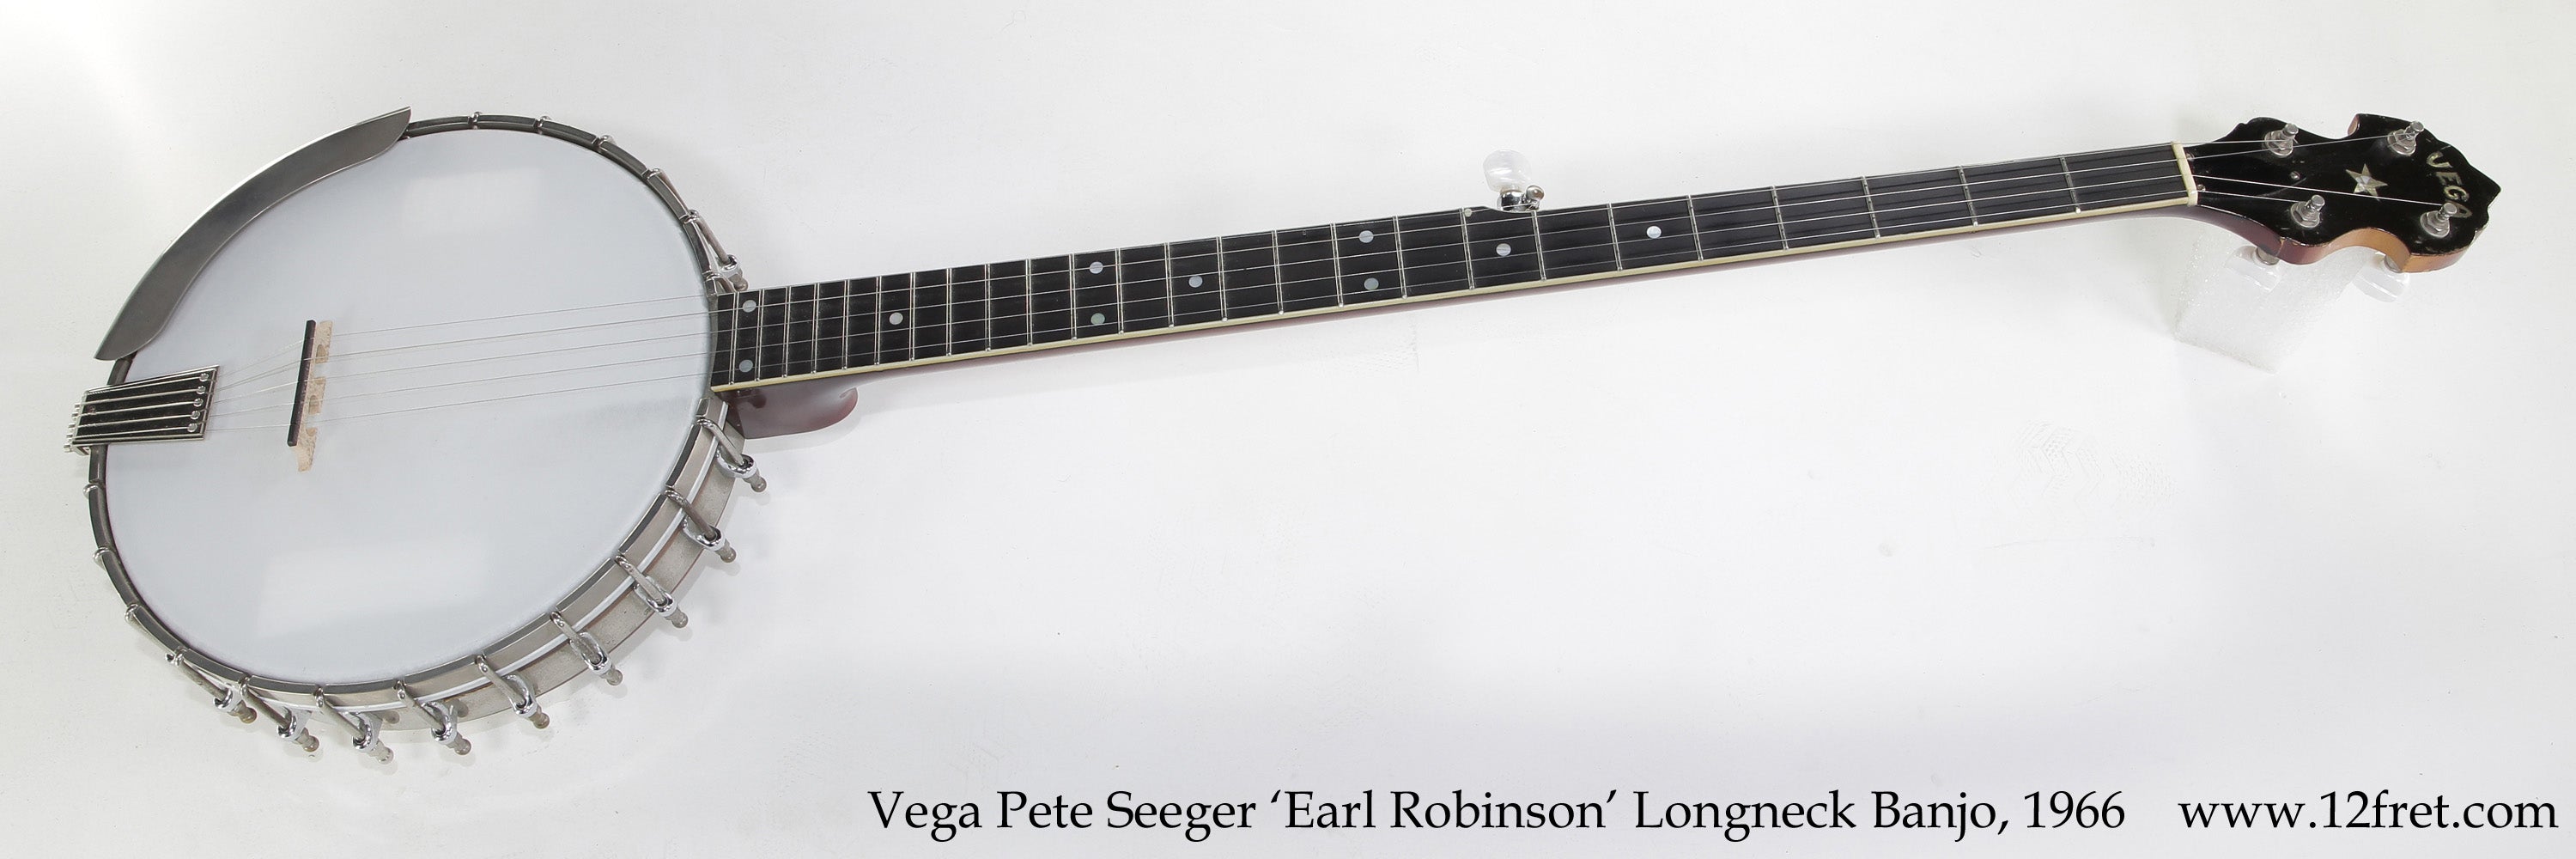 Vega Pete Seeger 'Earl Robinson' Longneck Banjo, 1966 - The Twelfth Fret